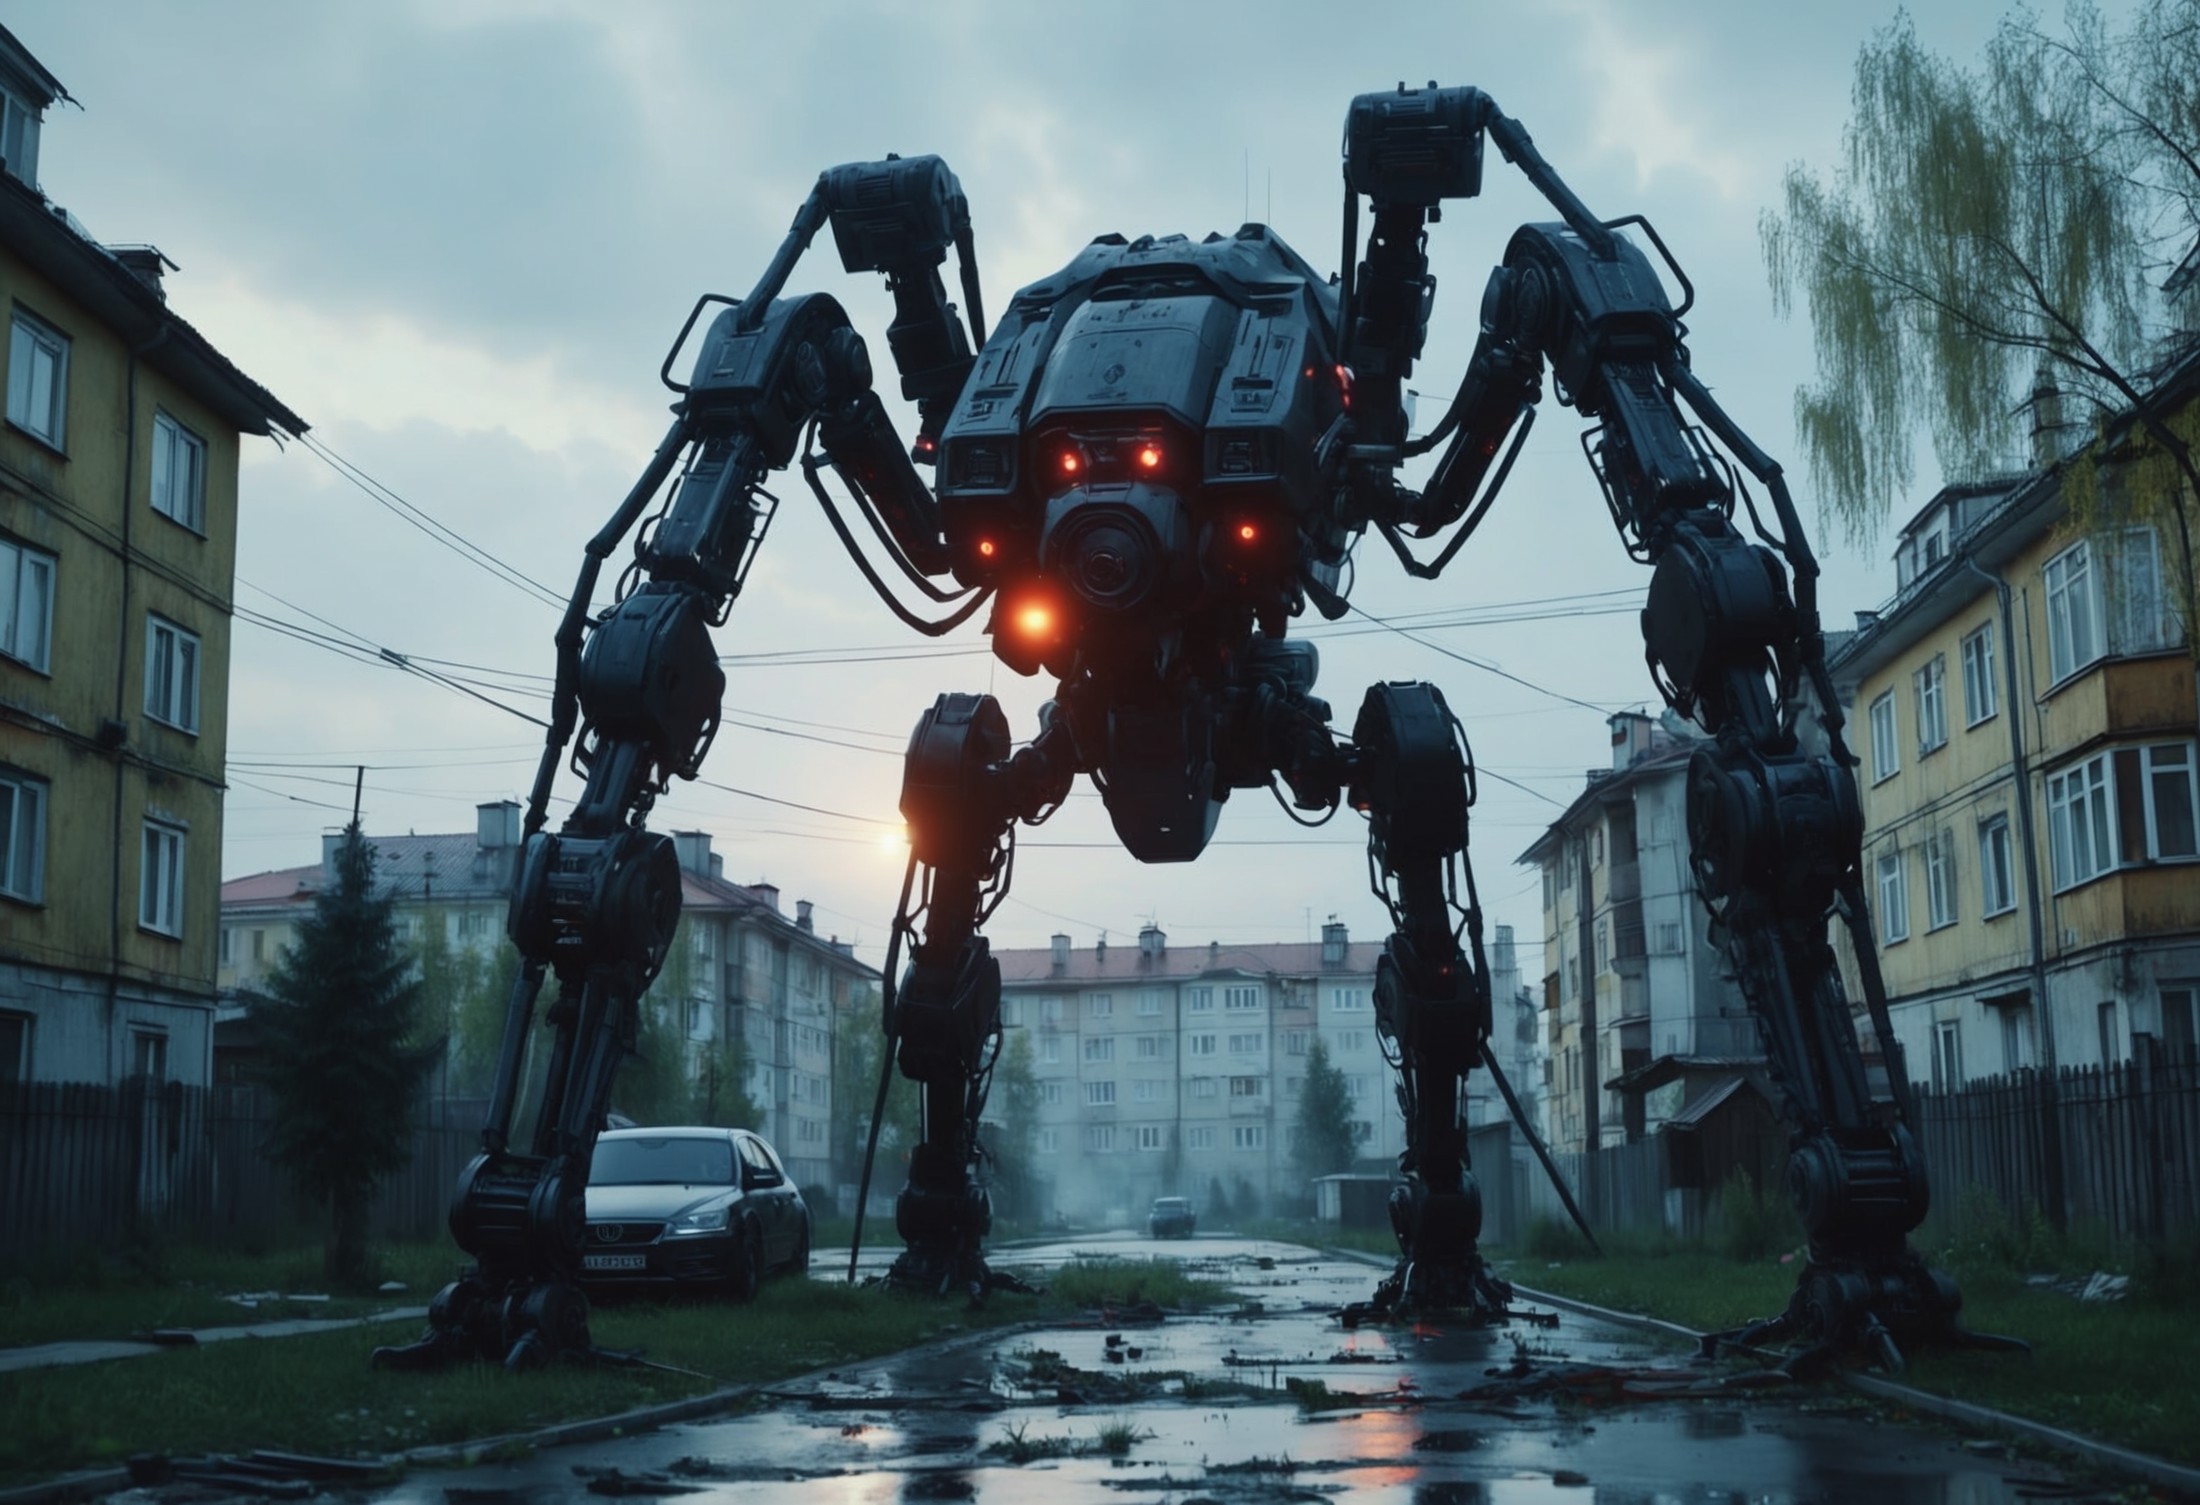 cinematic shot, realistic photograph, spider mech robot with machine guns in a russian neighborhood, lighting